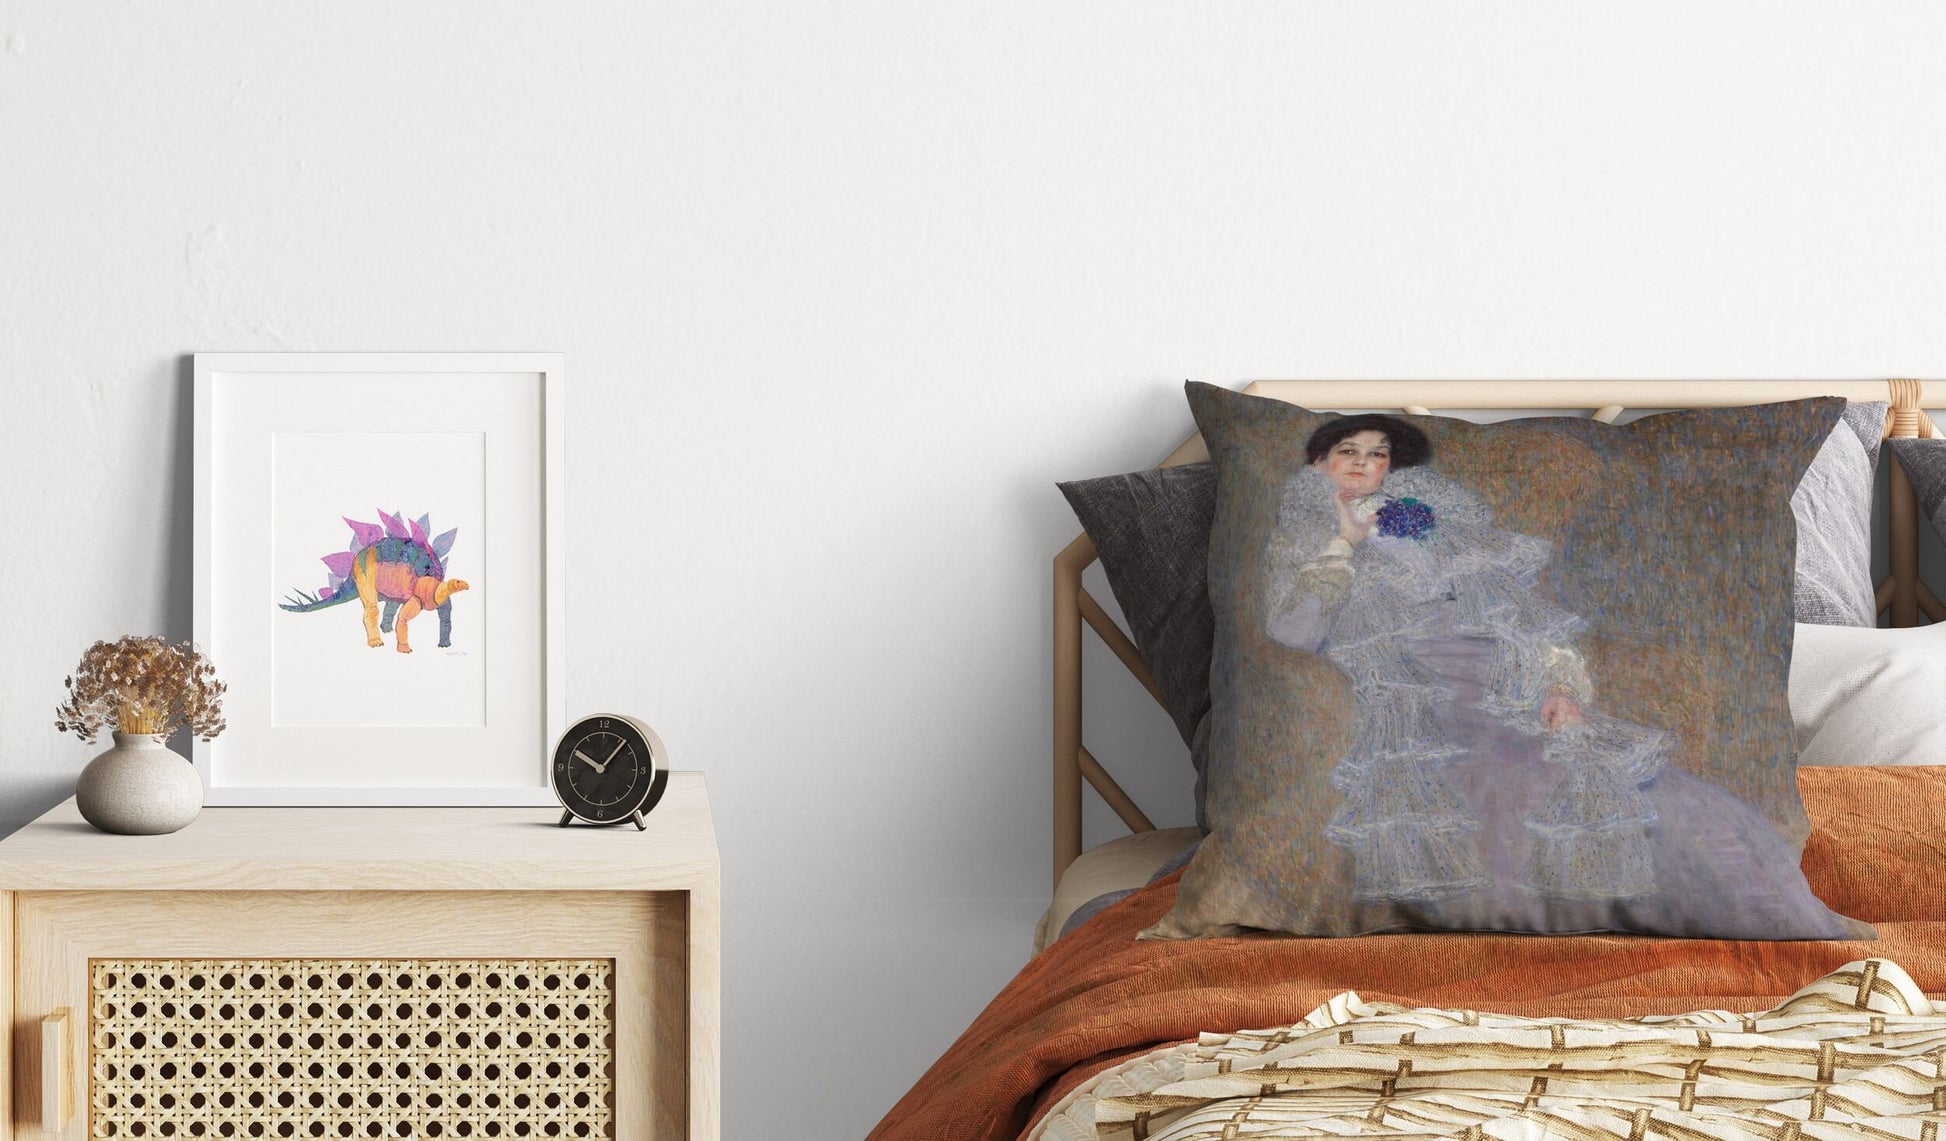 Gustav Klimt Famous Painting Portrait Of Marie Henneberg, Decorative Pillow, Abstract Throw Pillow Cover, Artist Pillow, Purple